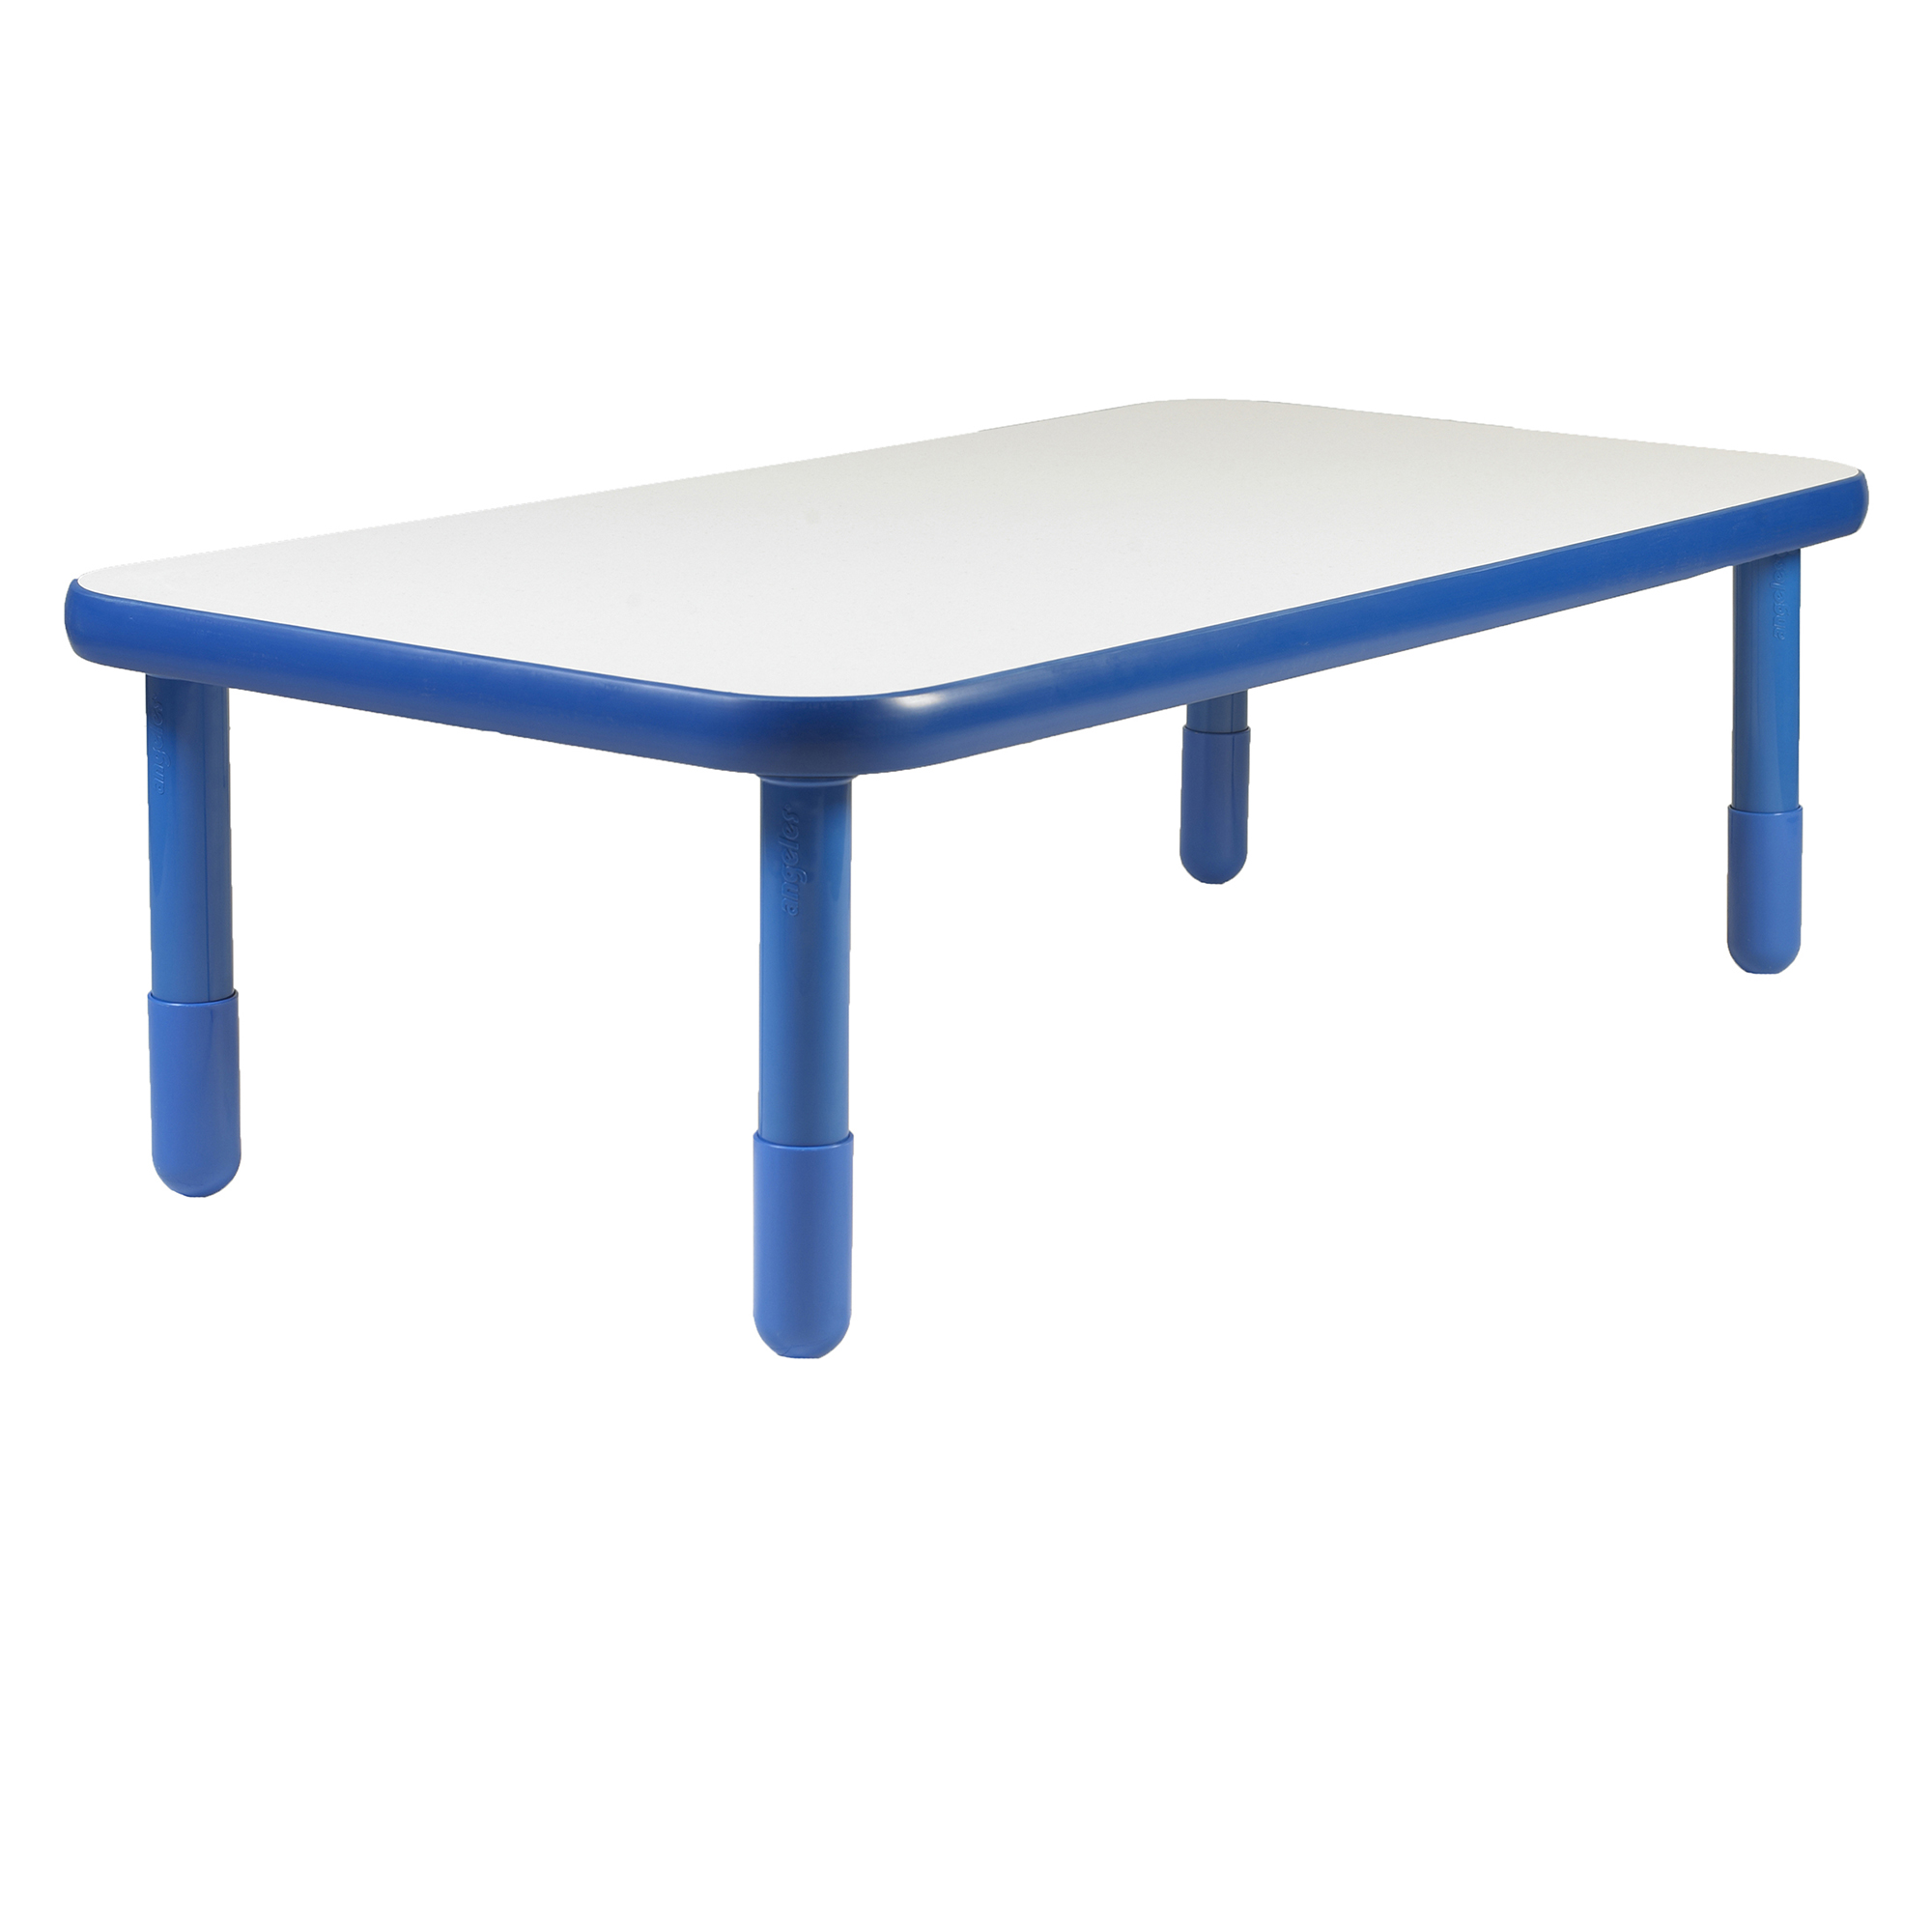 BaseLine® 152,5 cm  x 76 cm  Rectangular Table - Royal Blue with 45,5 cm  Legs